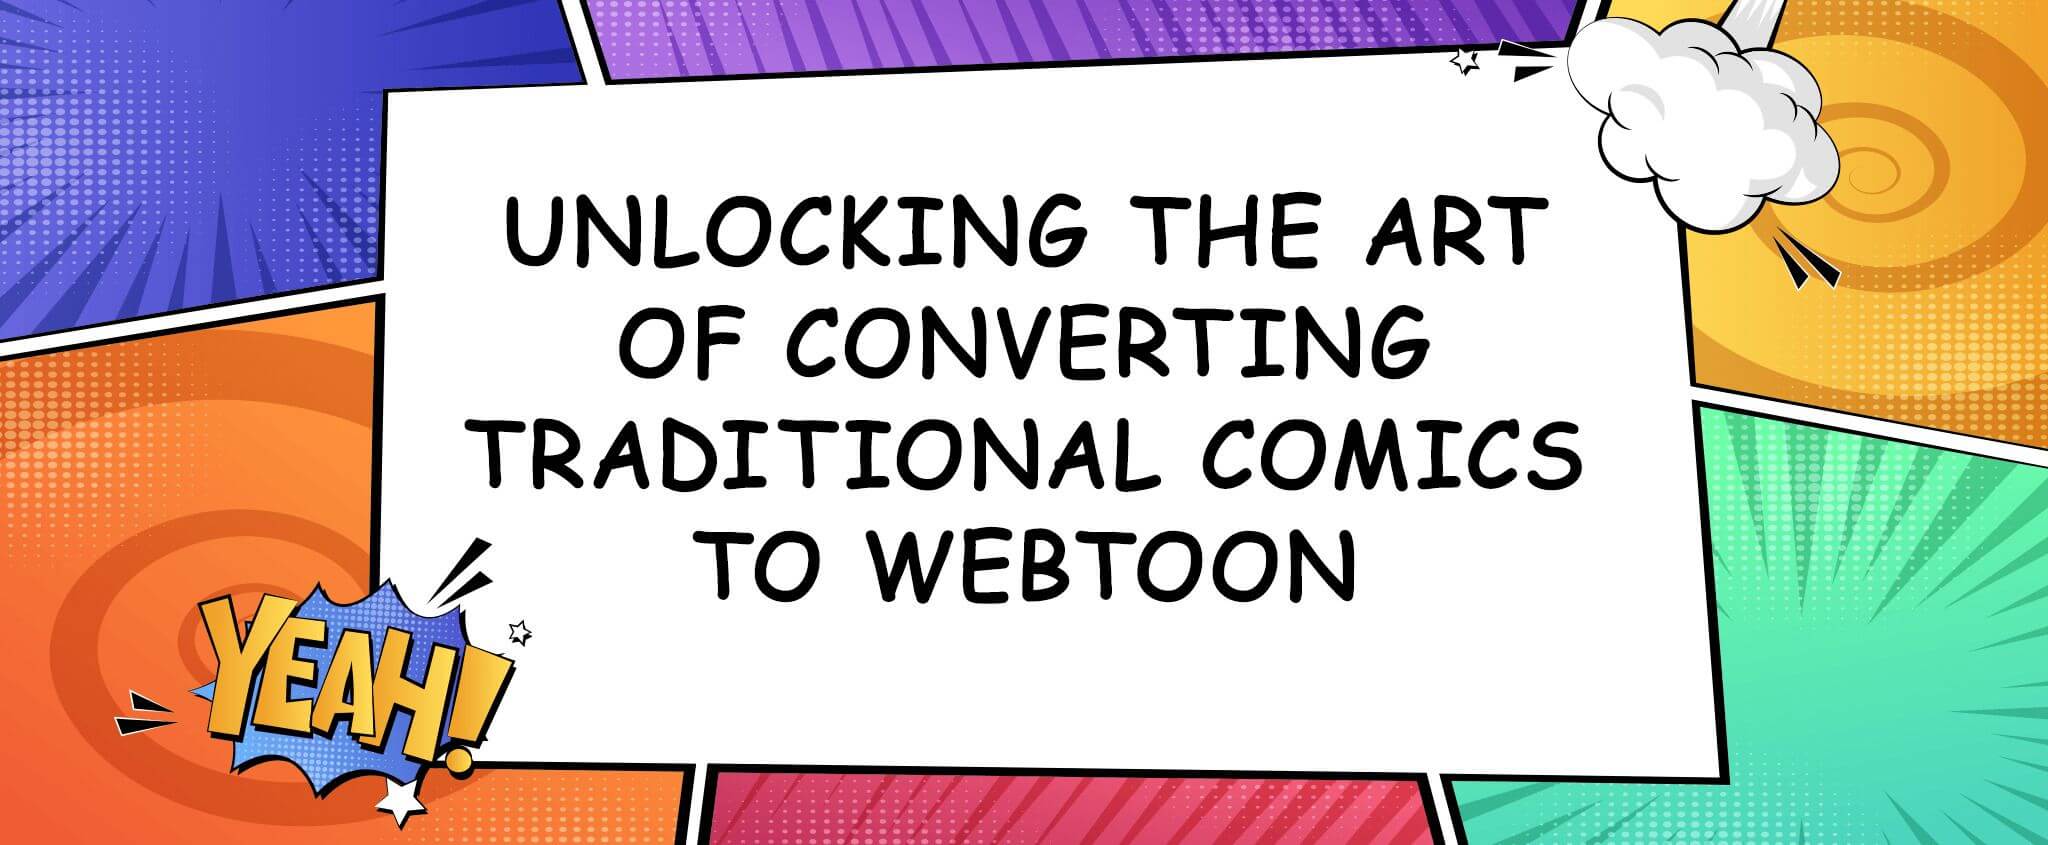 Unlocking the Art of Converting Traditional Comics to Webtoon